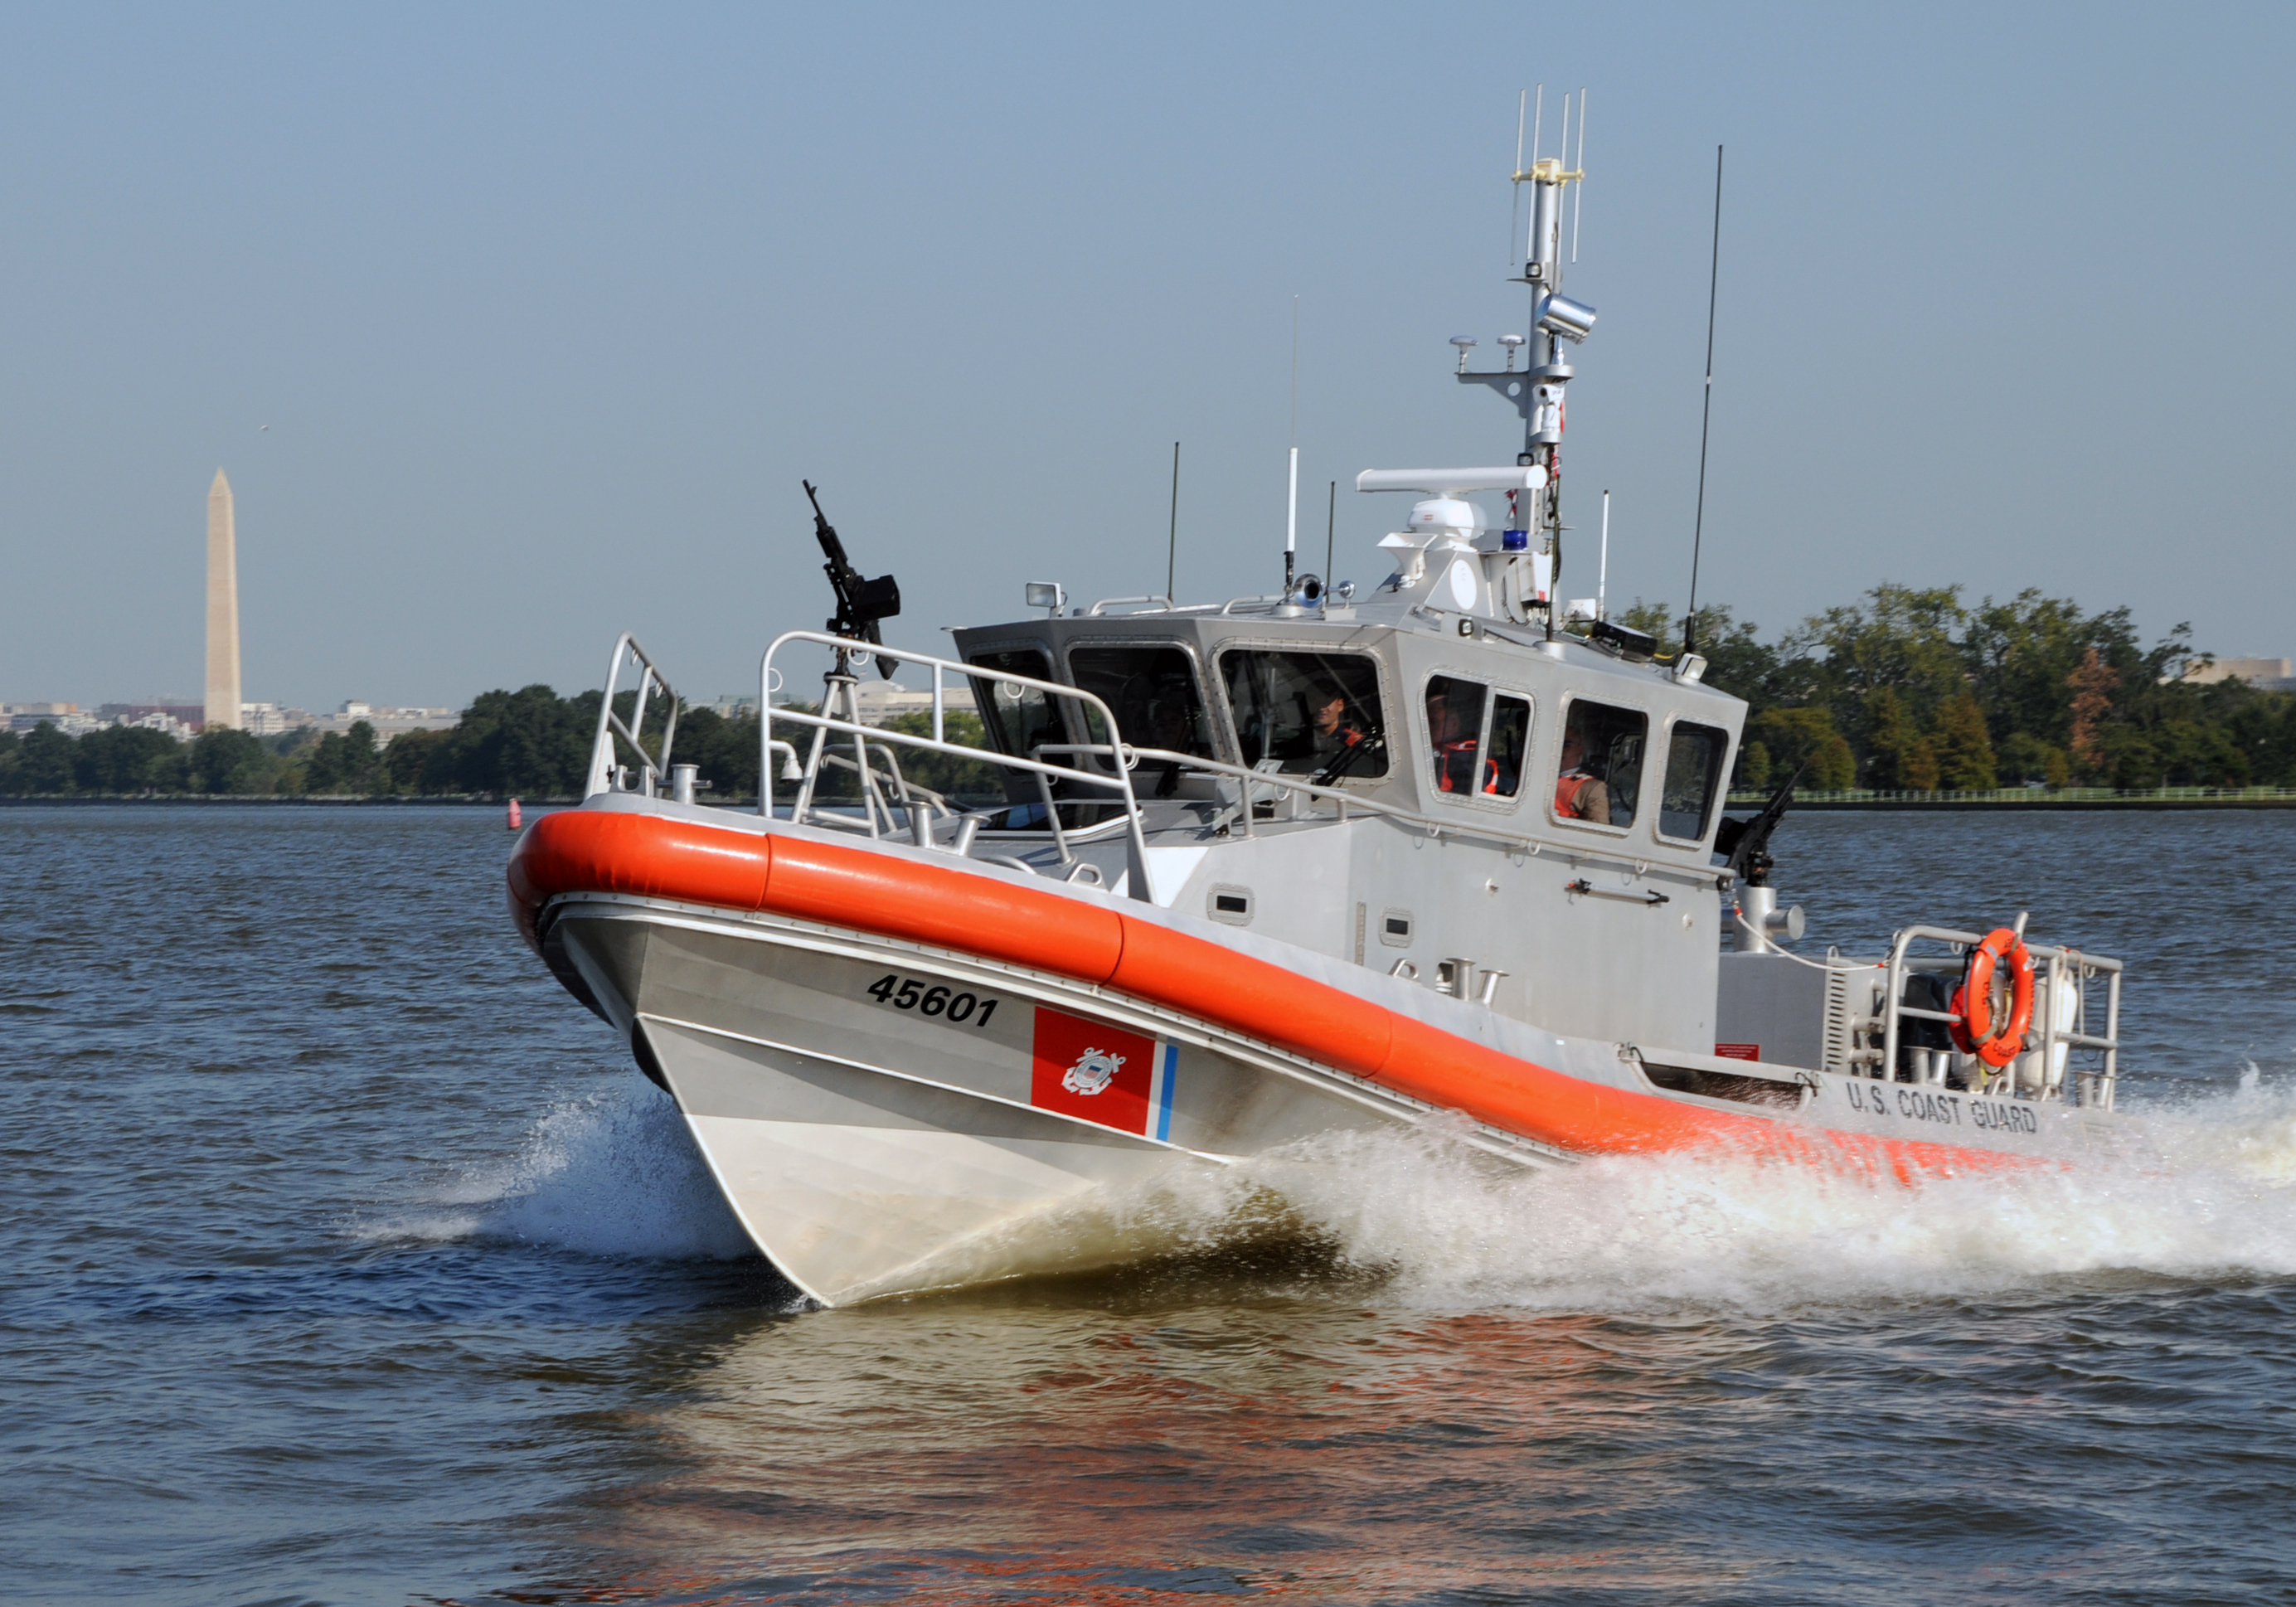 Response boats photo